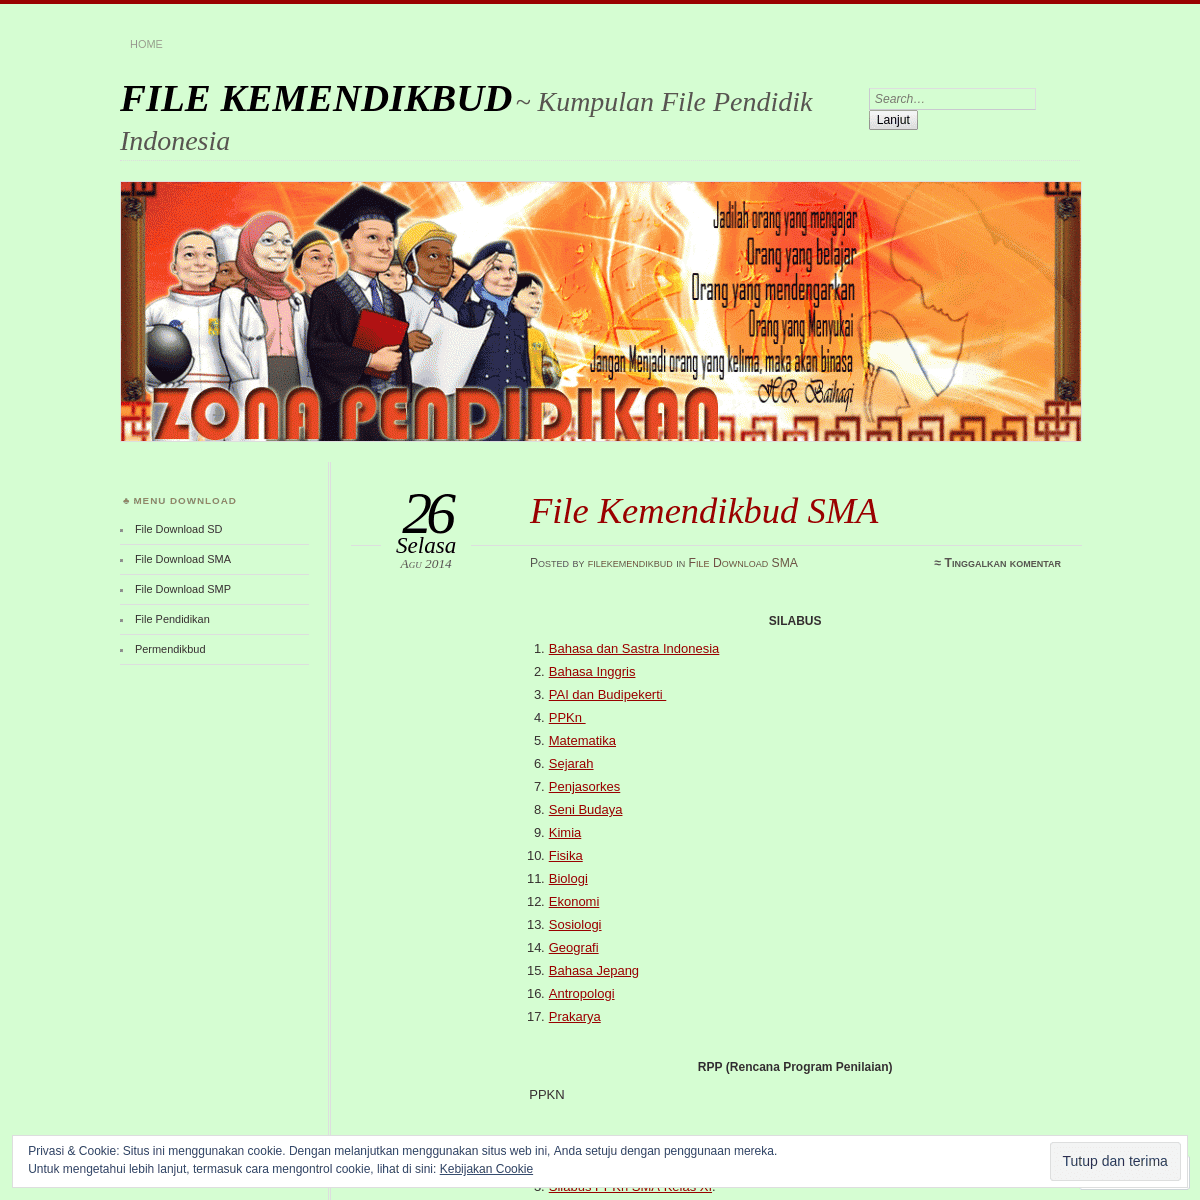 A complete backup of filekemendikbud.wordpress.com